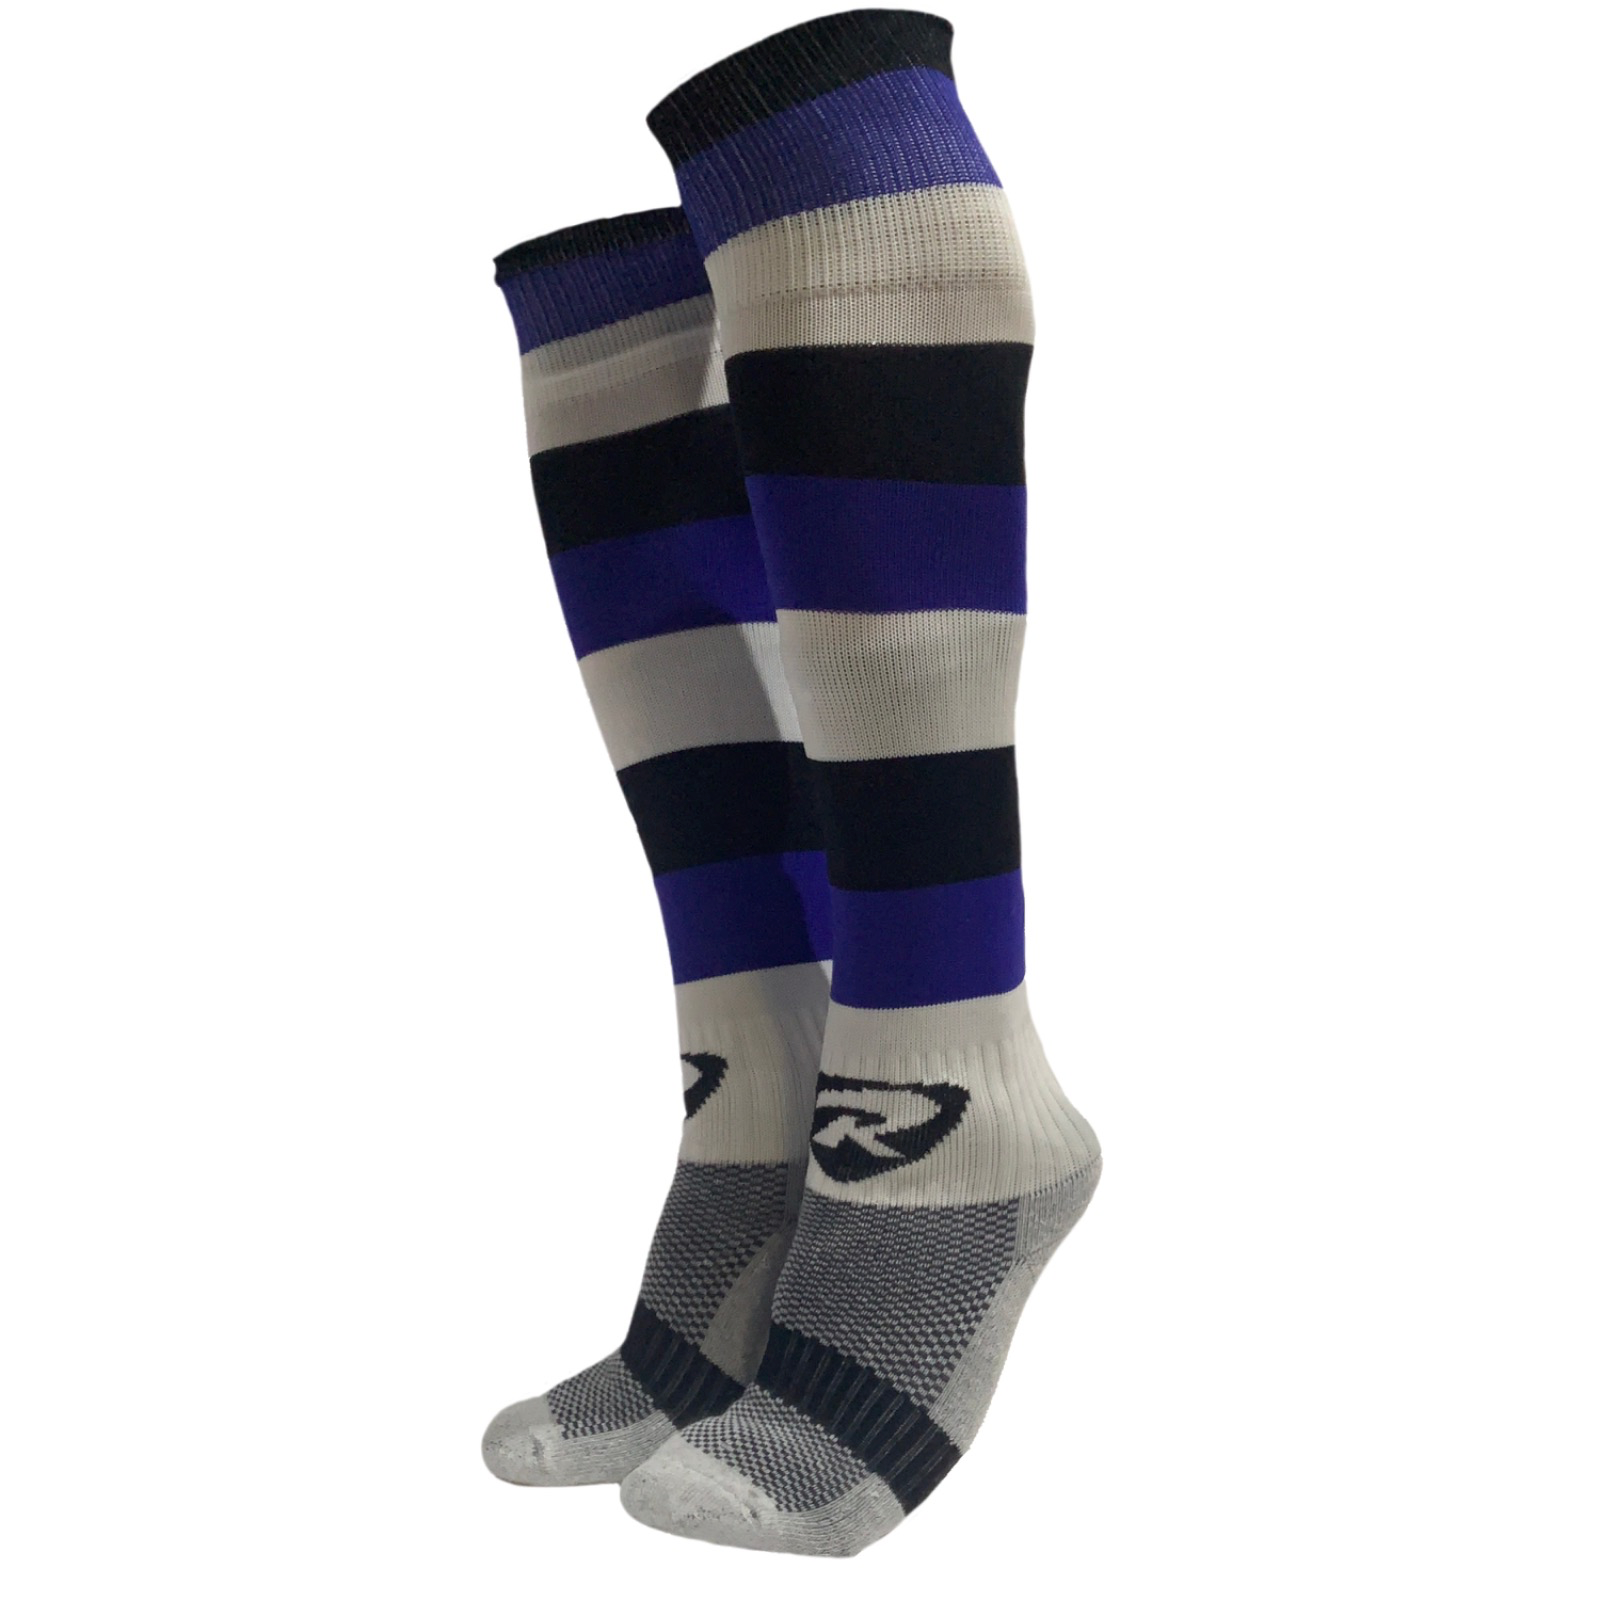 Rugbytech Hooped Sock